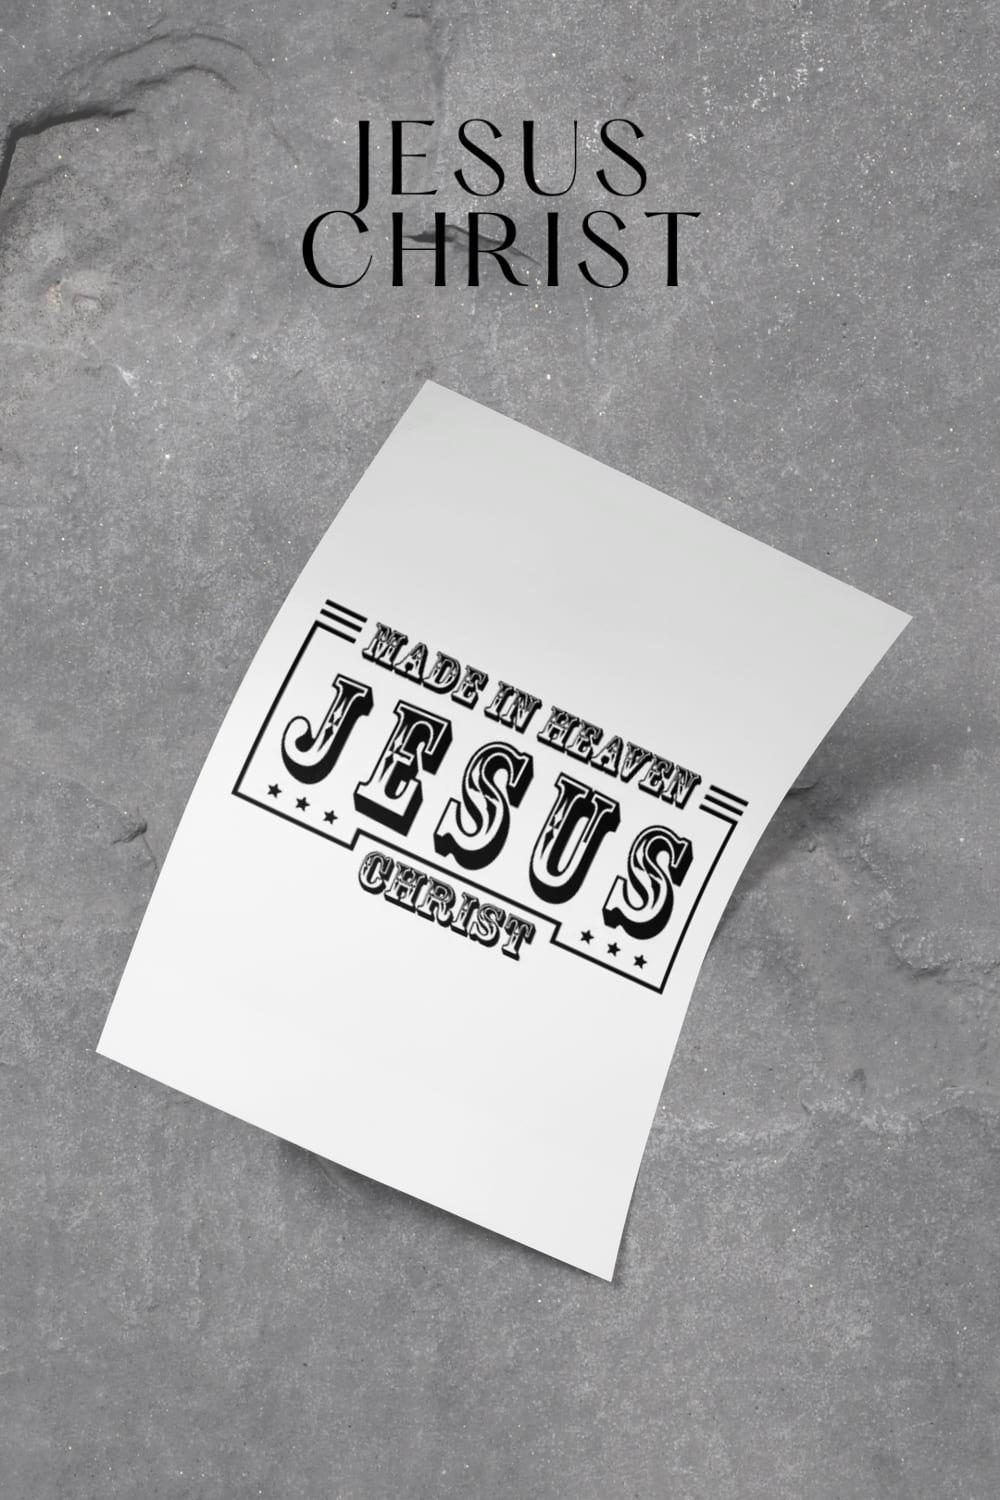 Logo on white sheet "Jesus Christ".